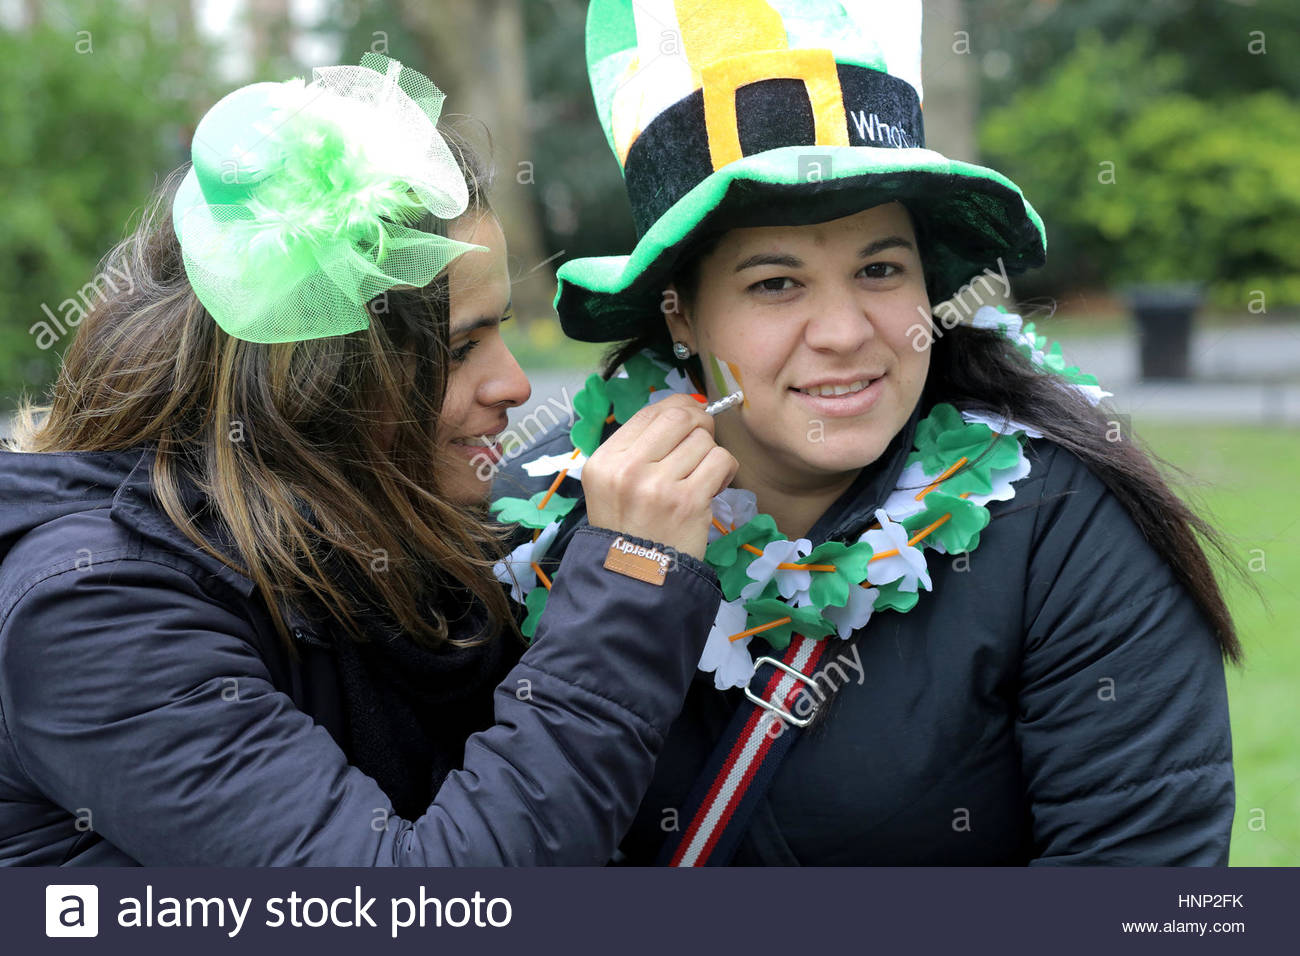 St Patrick's day celebrations in Dublin ireland as the parade starts Stock Photo